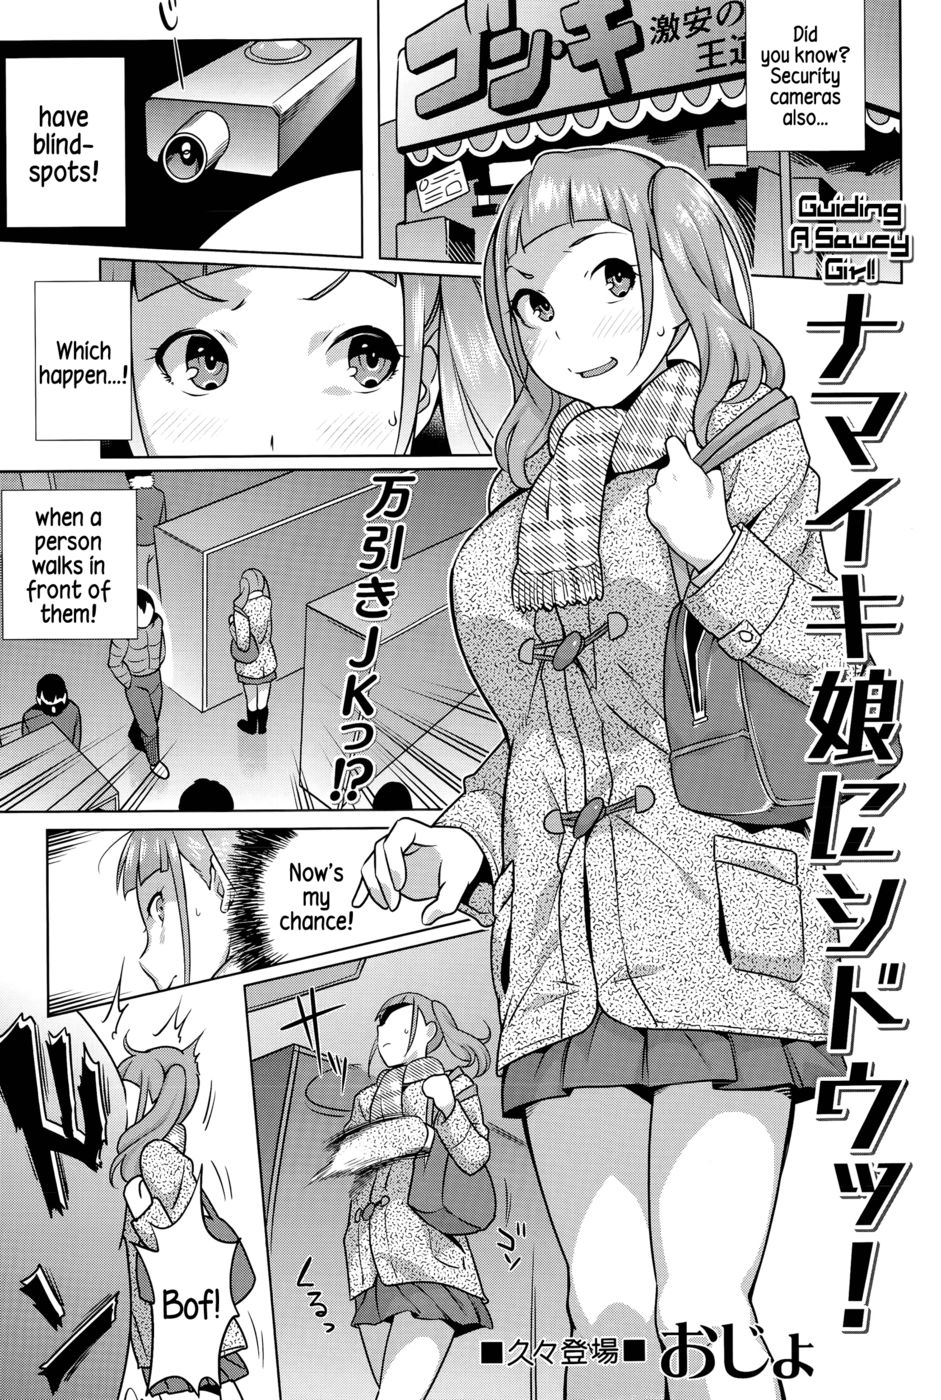 Hentai Manga Comic-Guiding A Saucy Girl-Read-1